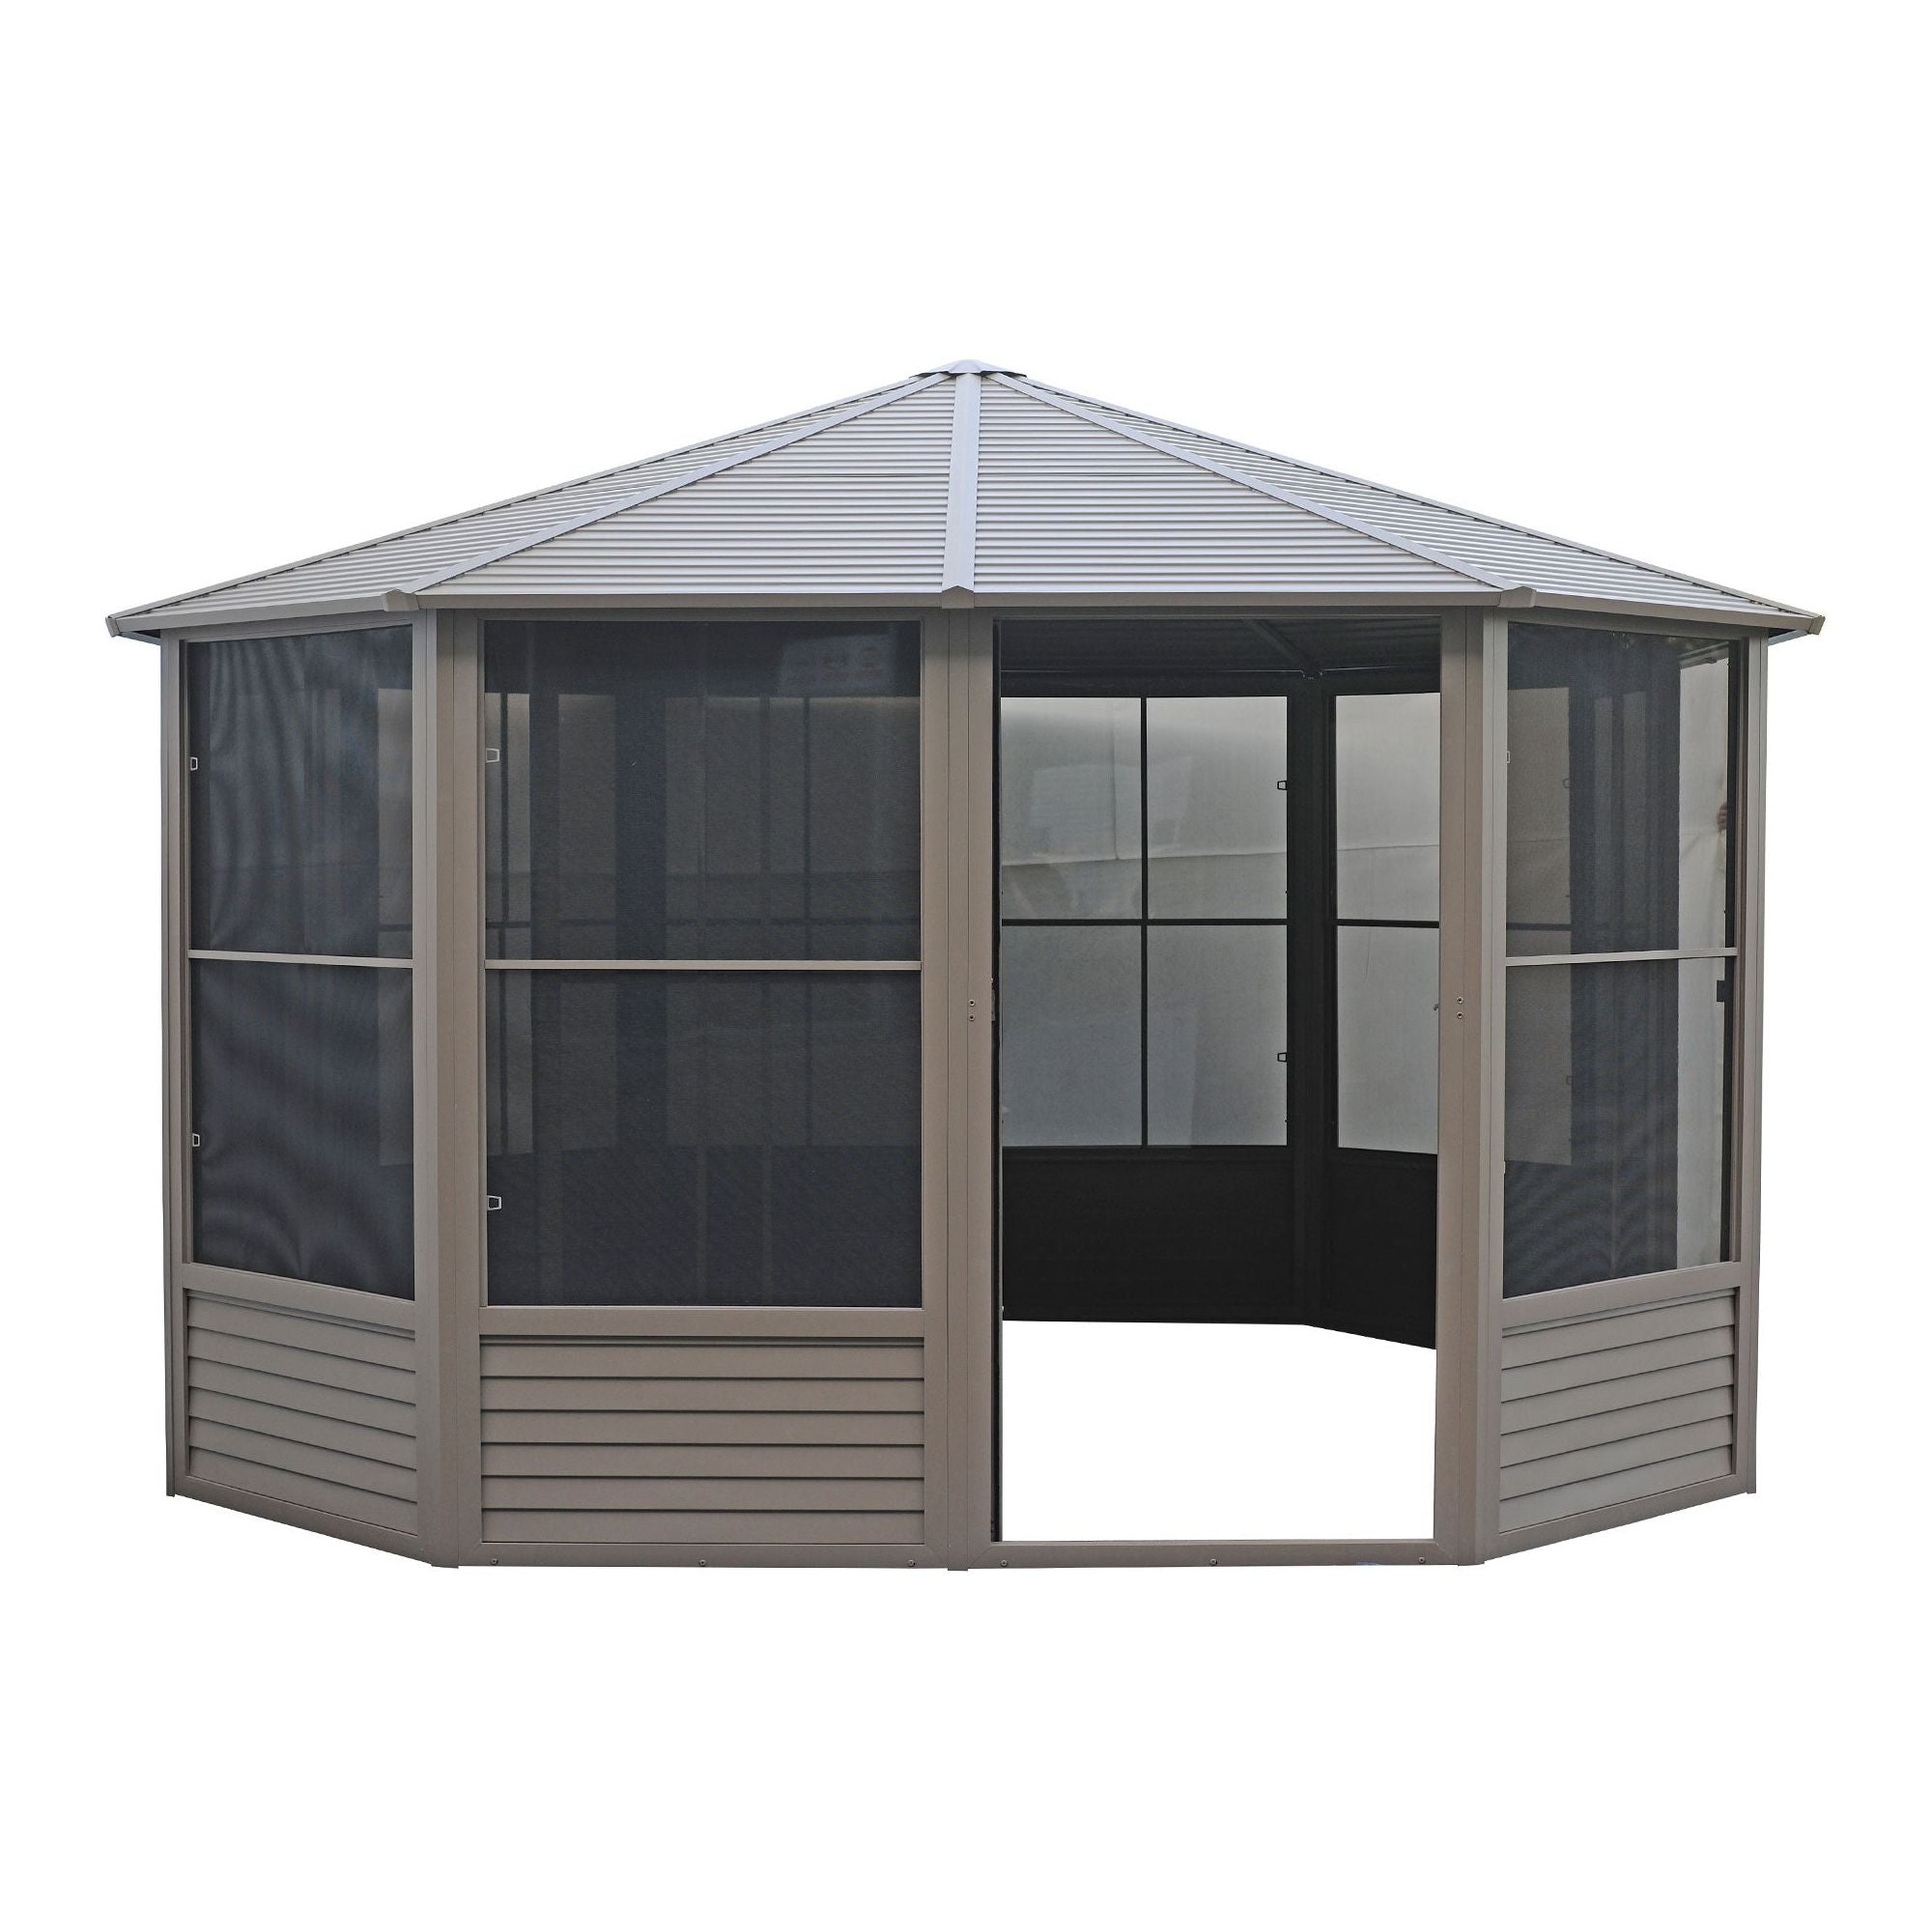 Gazebo Penguin Florence Solarium with Metal Roof 12'x12' - 41212MR - Serenity Provision